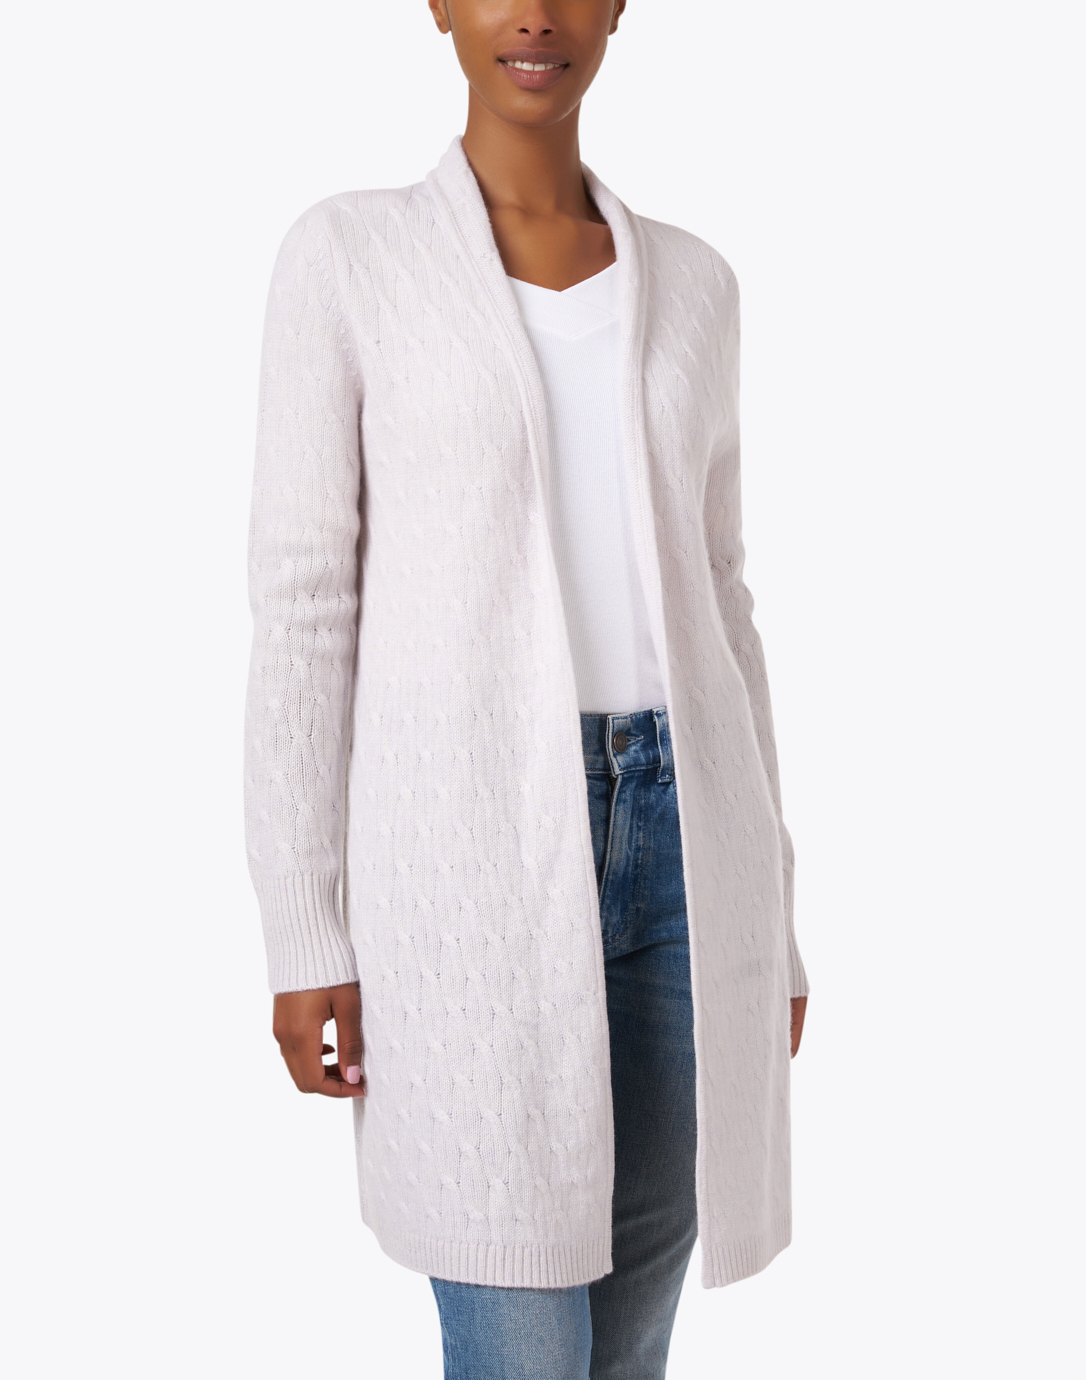 Women's Grey Knit Open Cardigan, White Turtleneck, Charcoal Wool